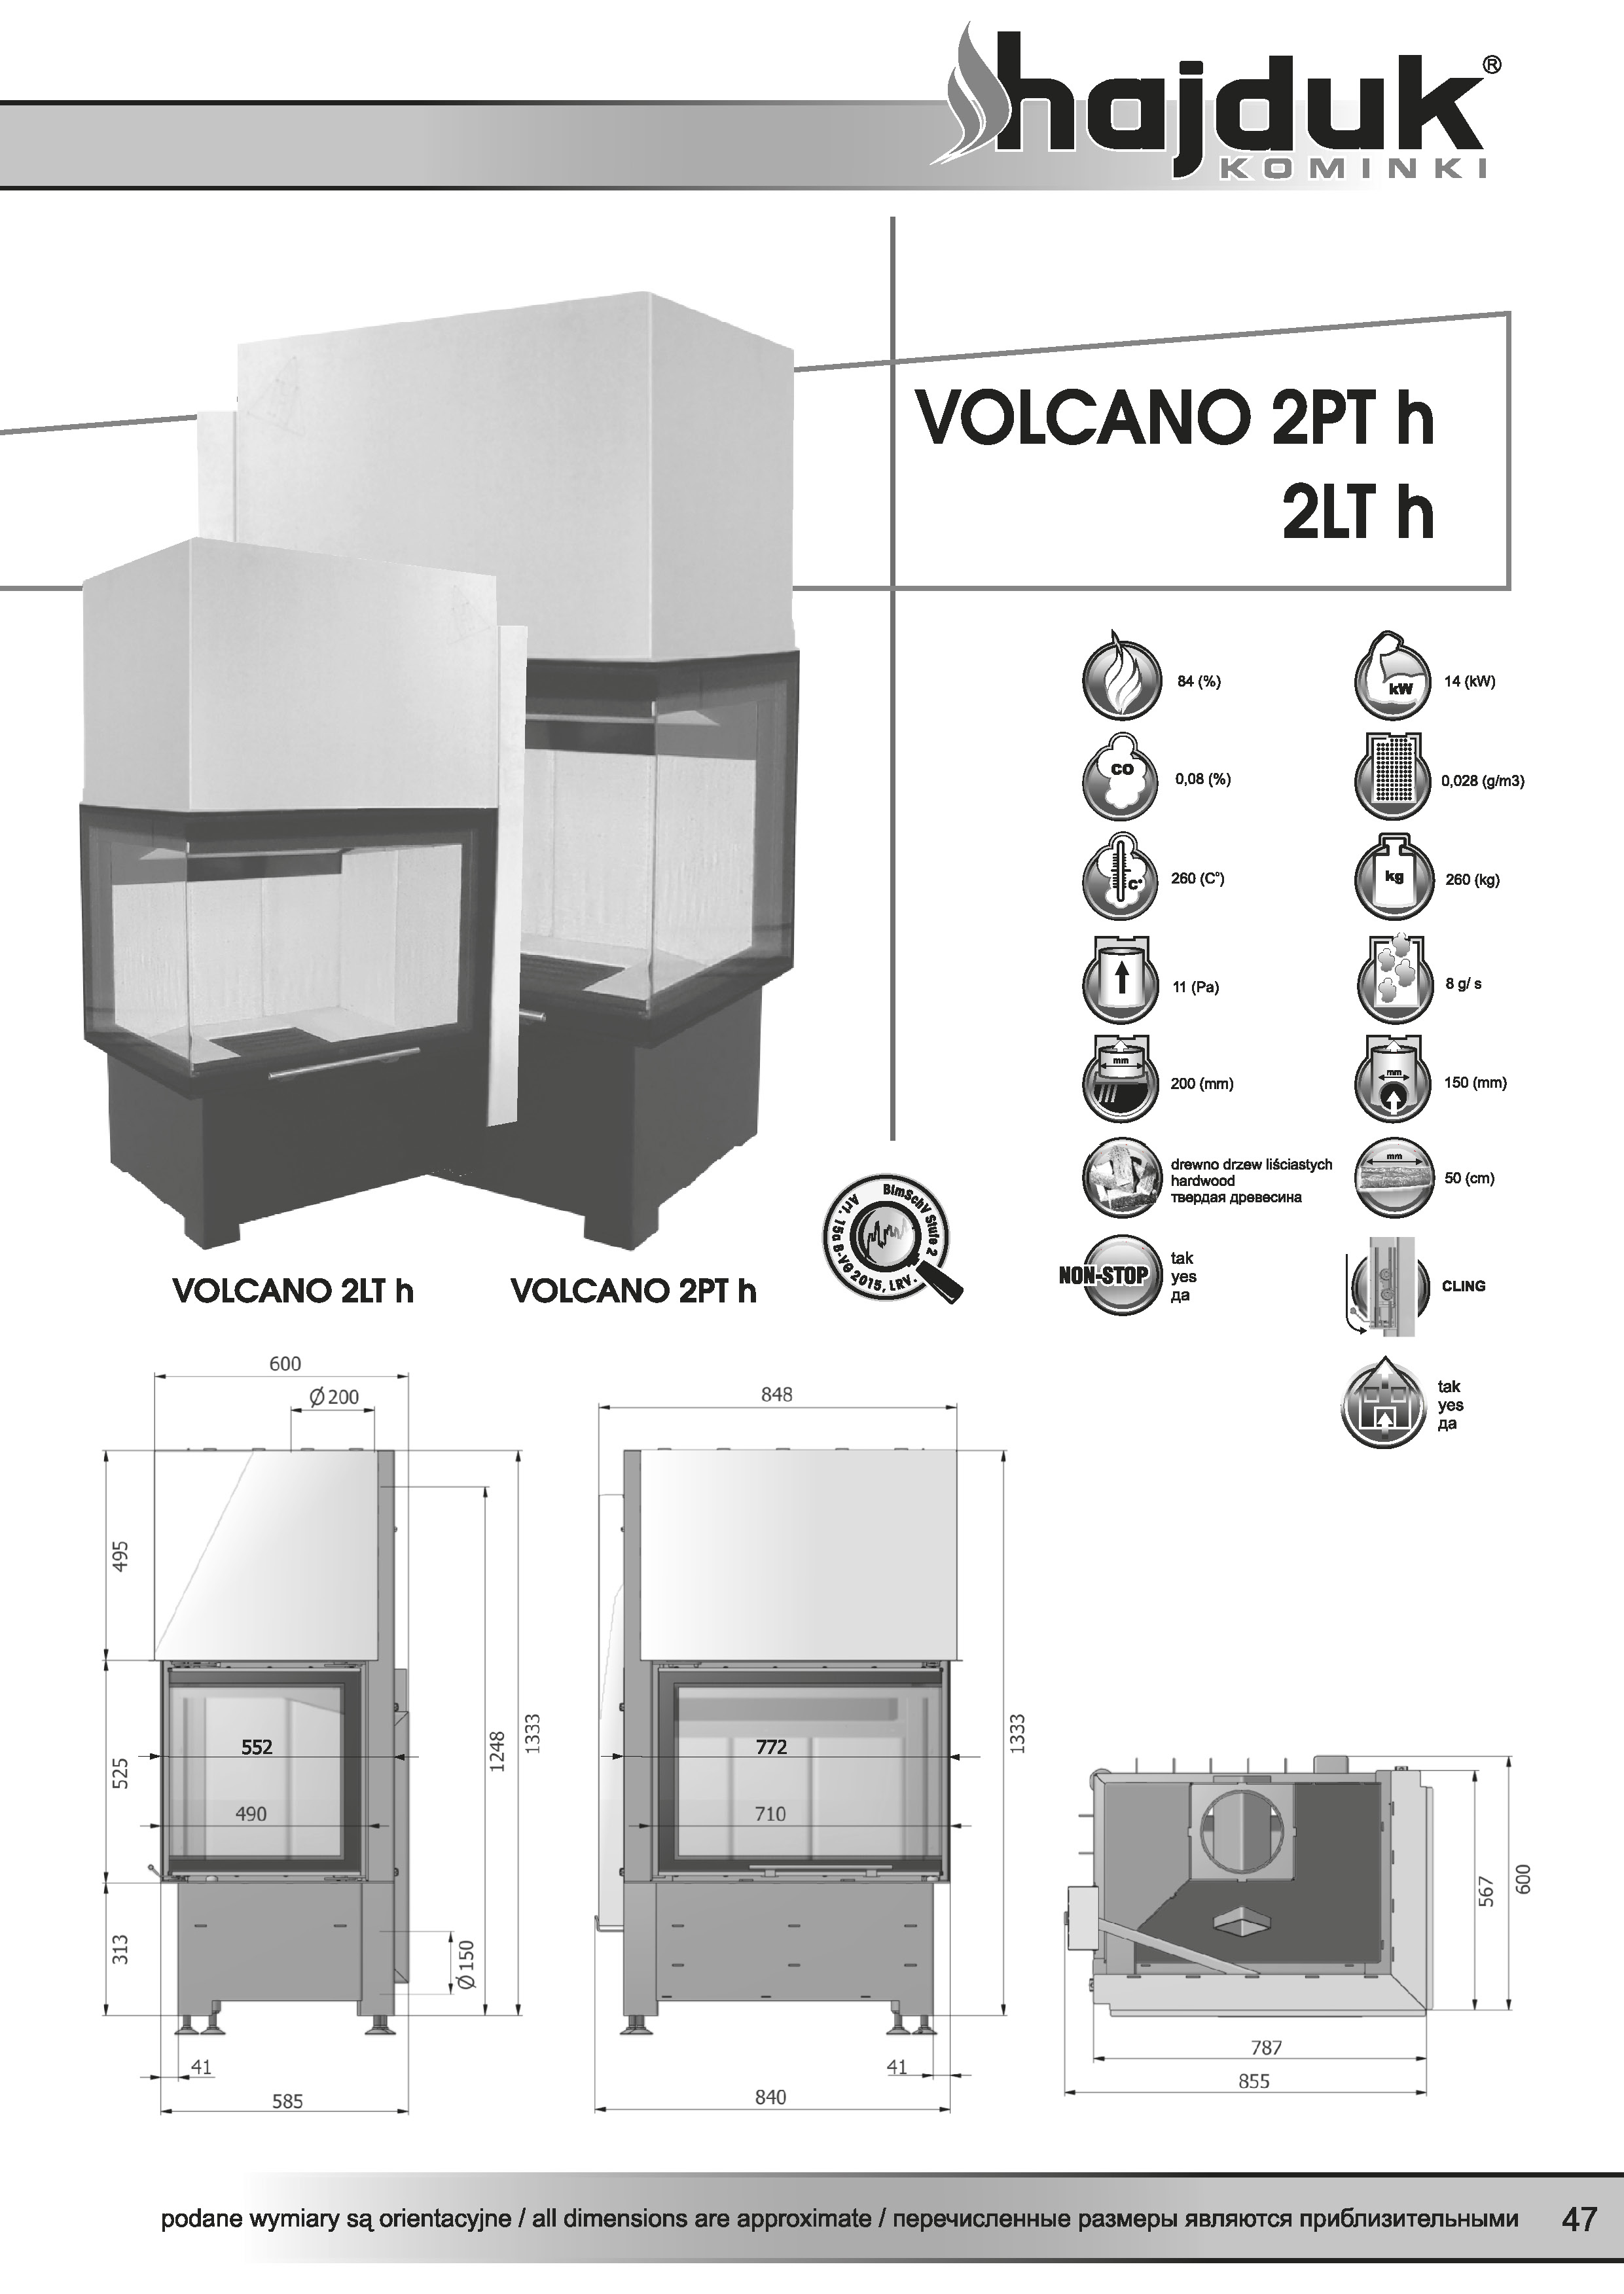 Volcano%202PTh%202LTh%20 %20karta%20techniczna - Hajduk Volcano 2LTh gleichzeitige Windschutzscheibe